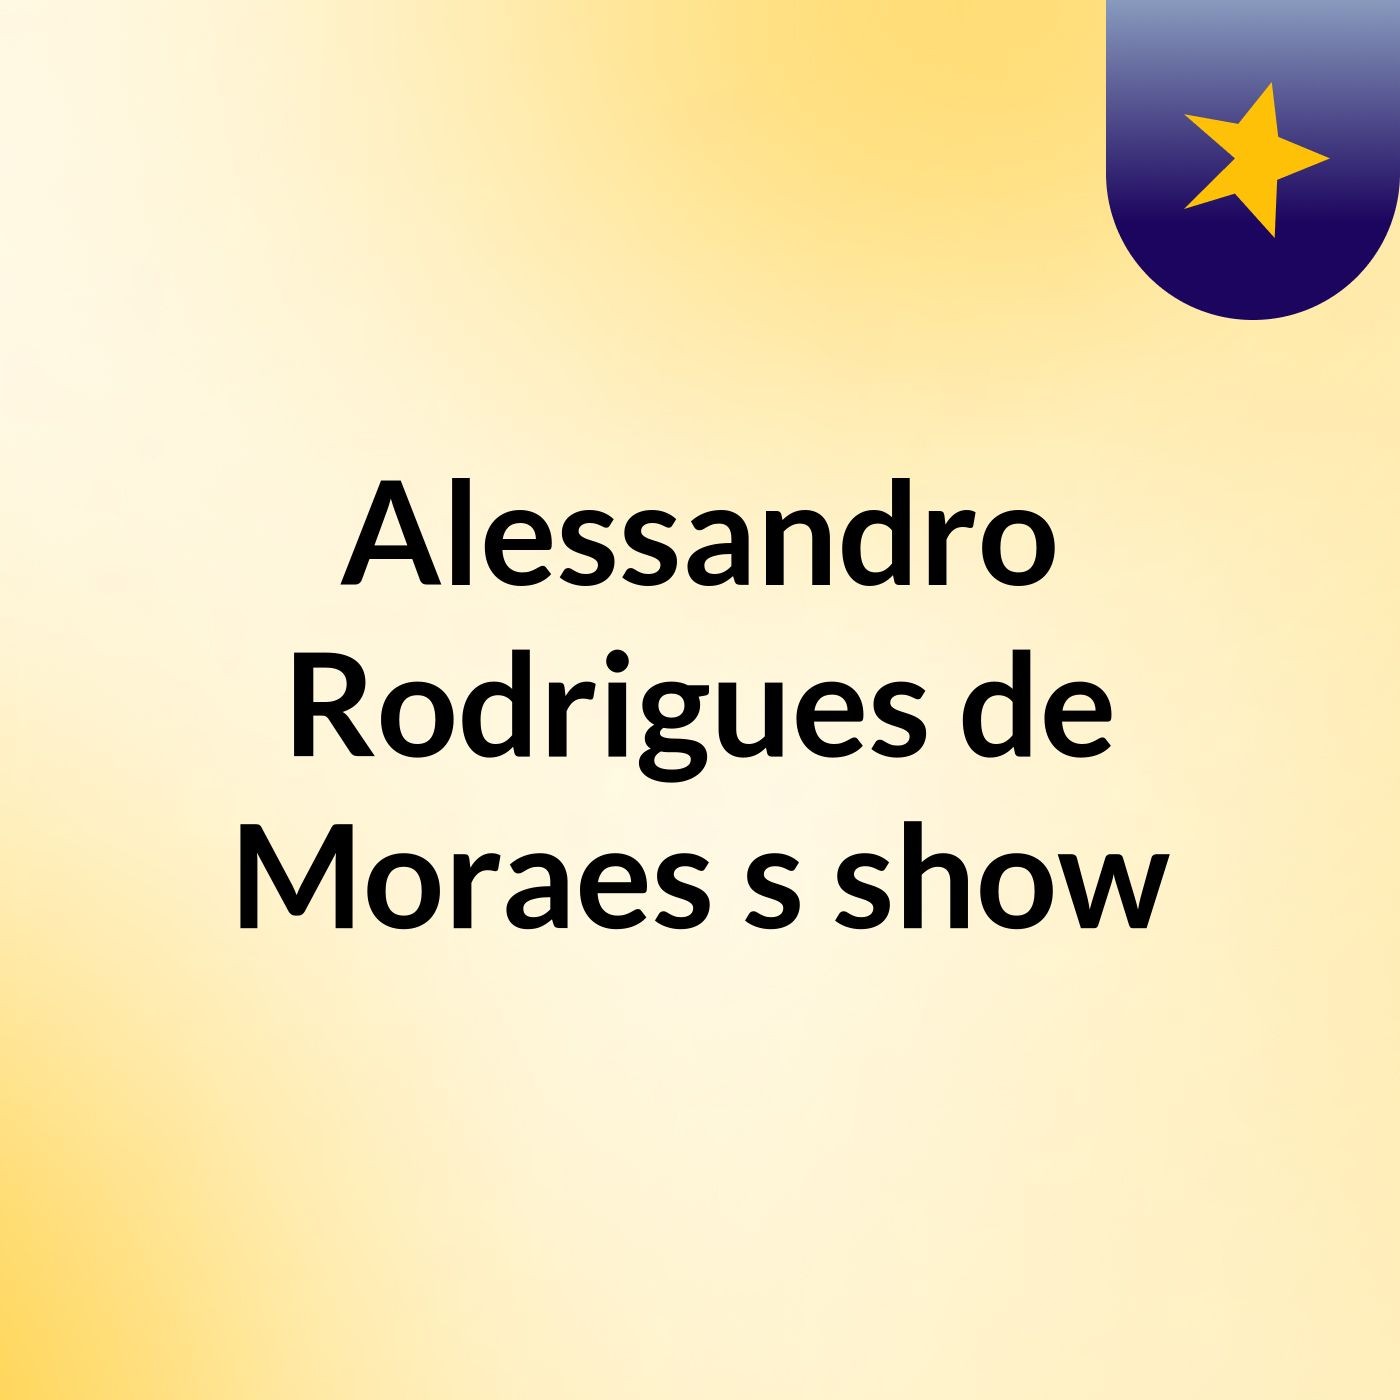 Alessandro Rodrigues de Moraes's show